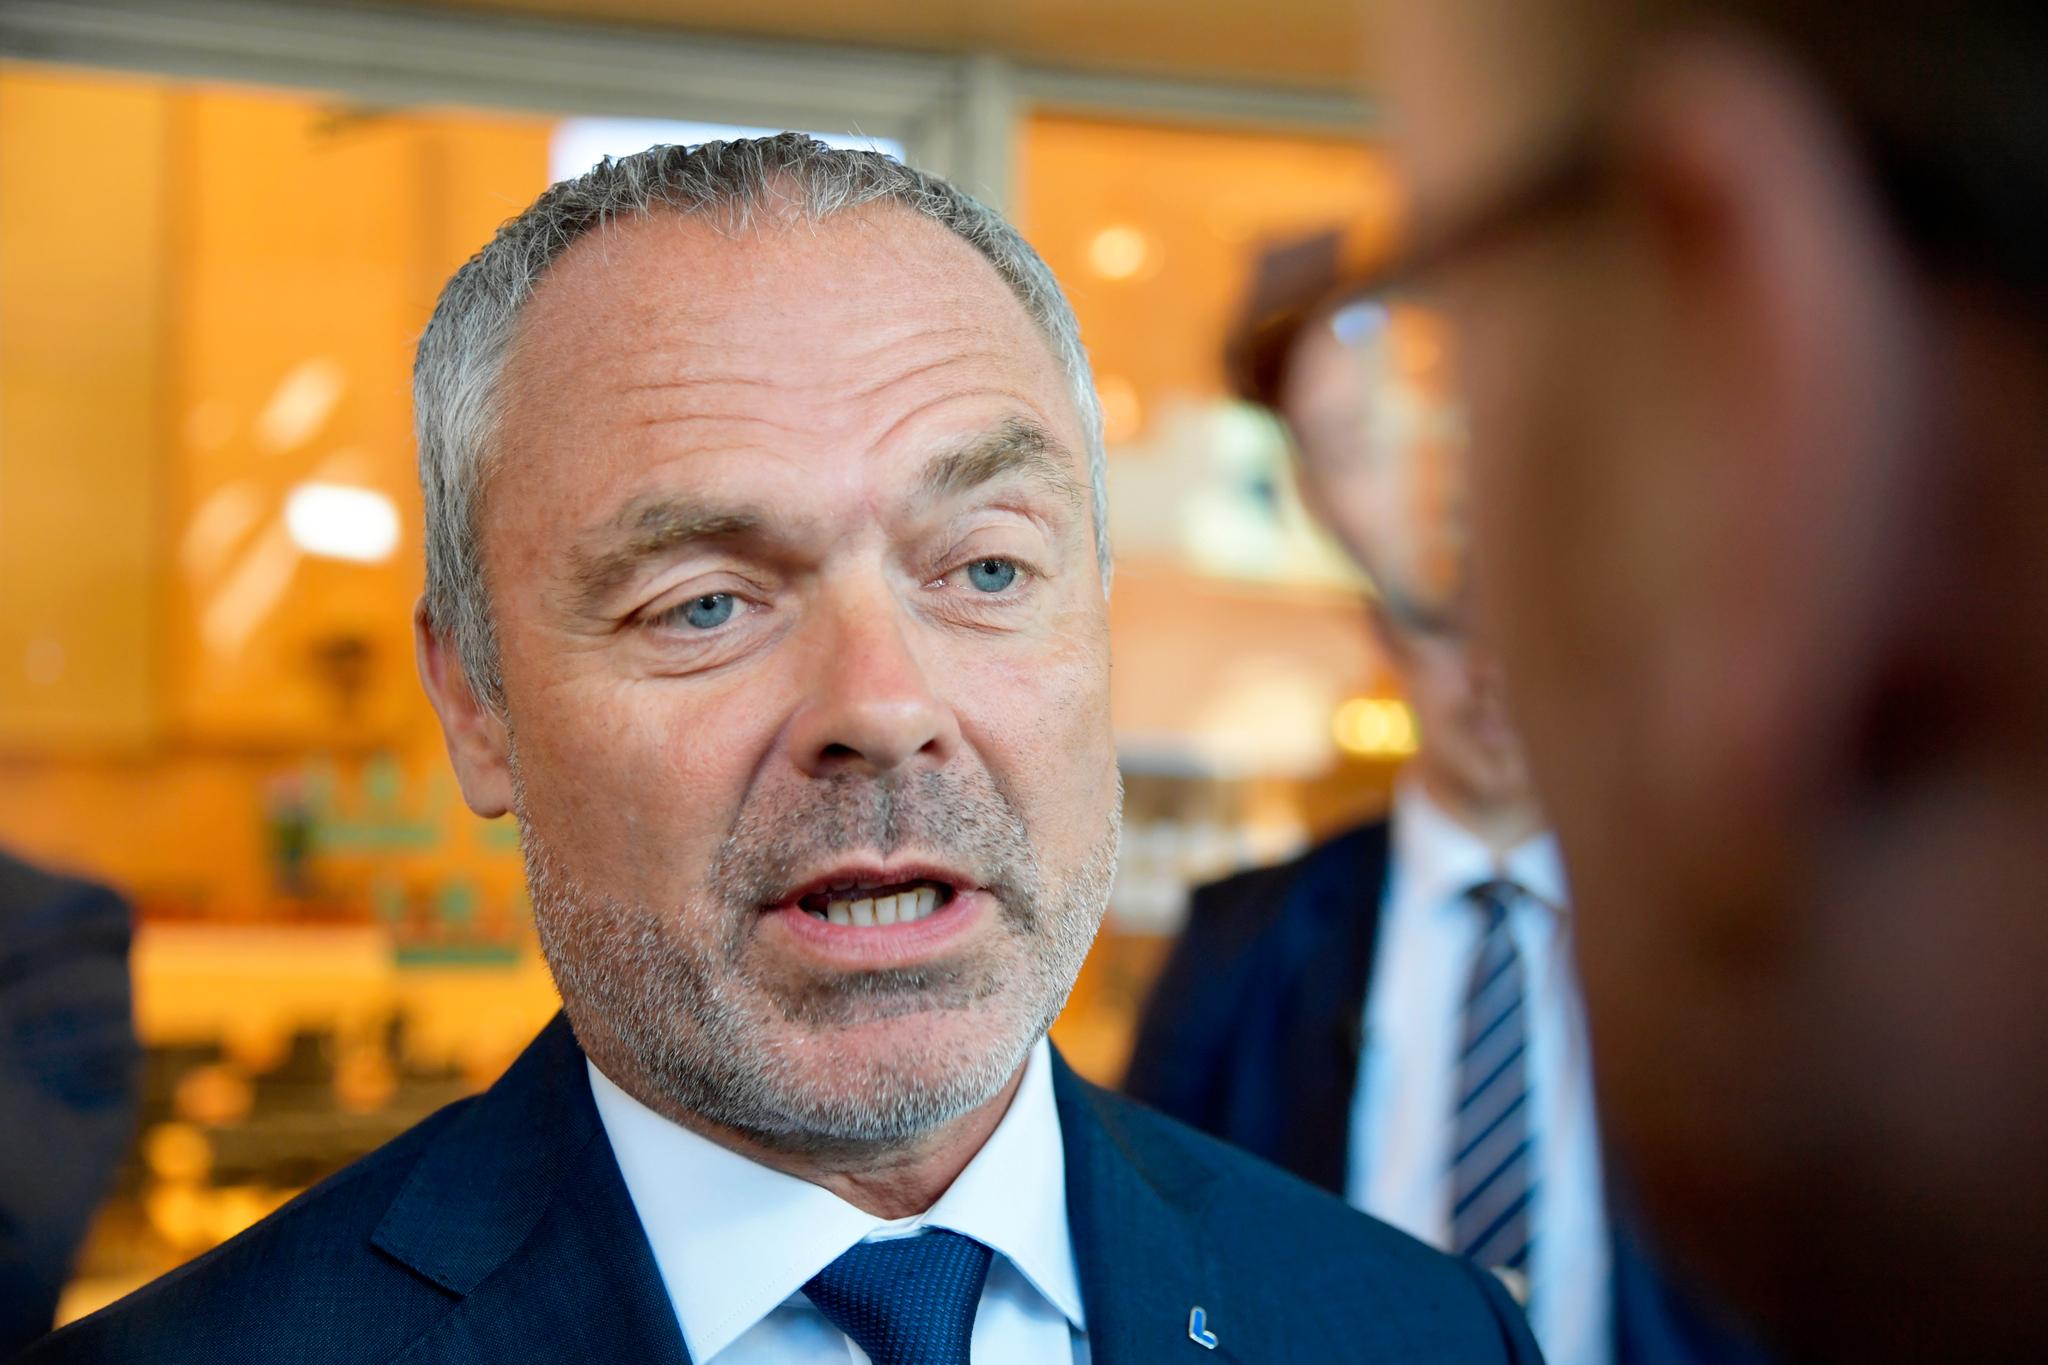 Jan Björklund leder partiet Liberalerna, som kan sammenlignes med norske Venstre. Partiet er splittet om hvilken retning de skal velge. 